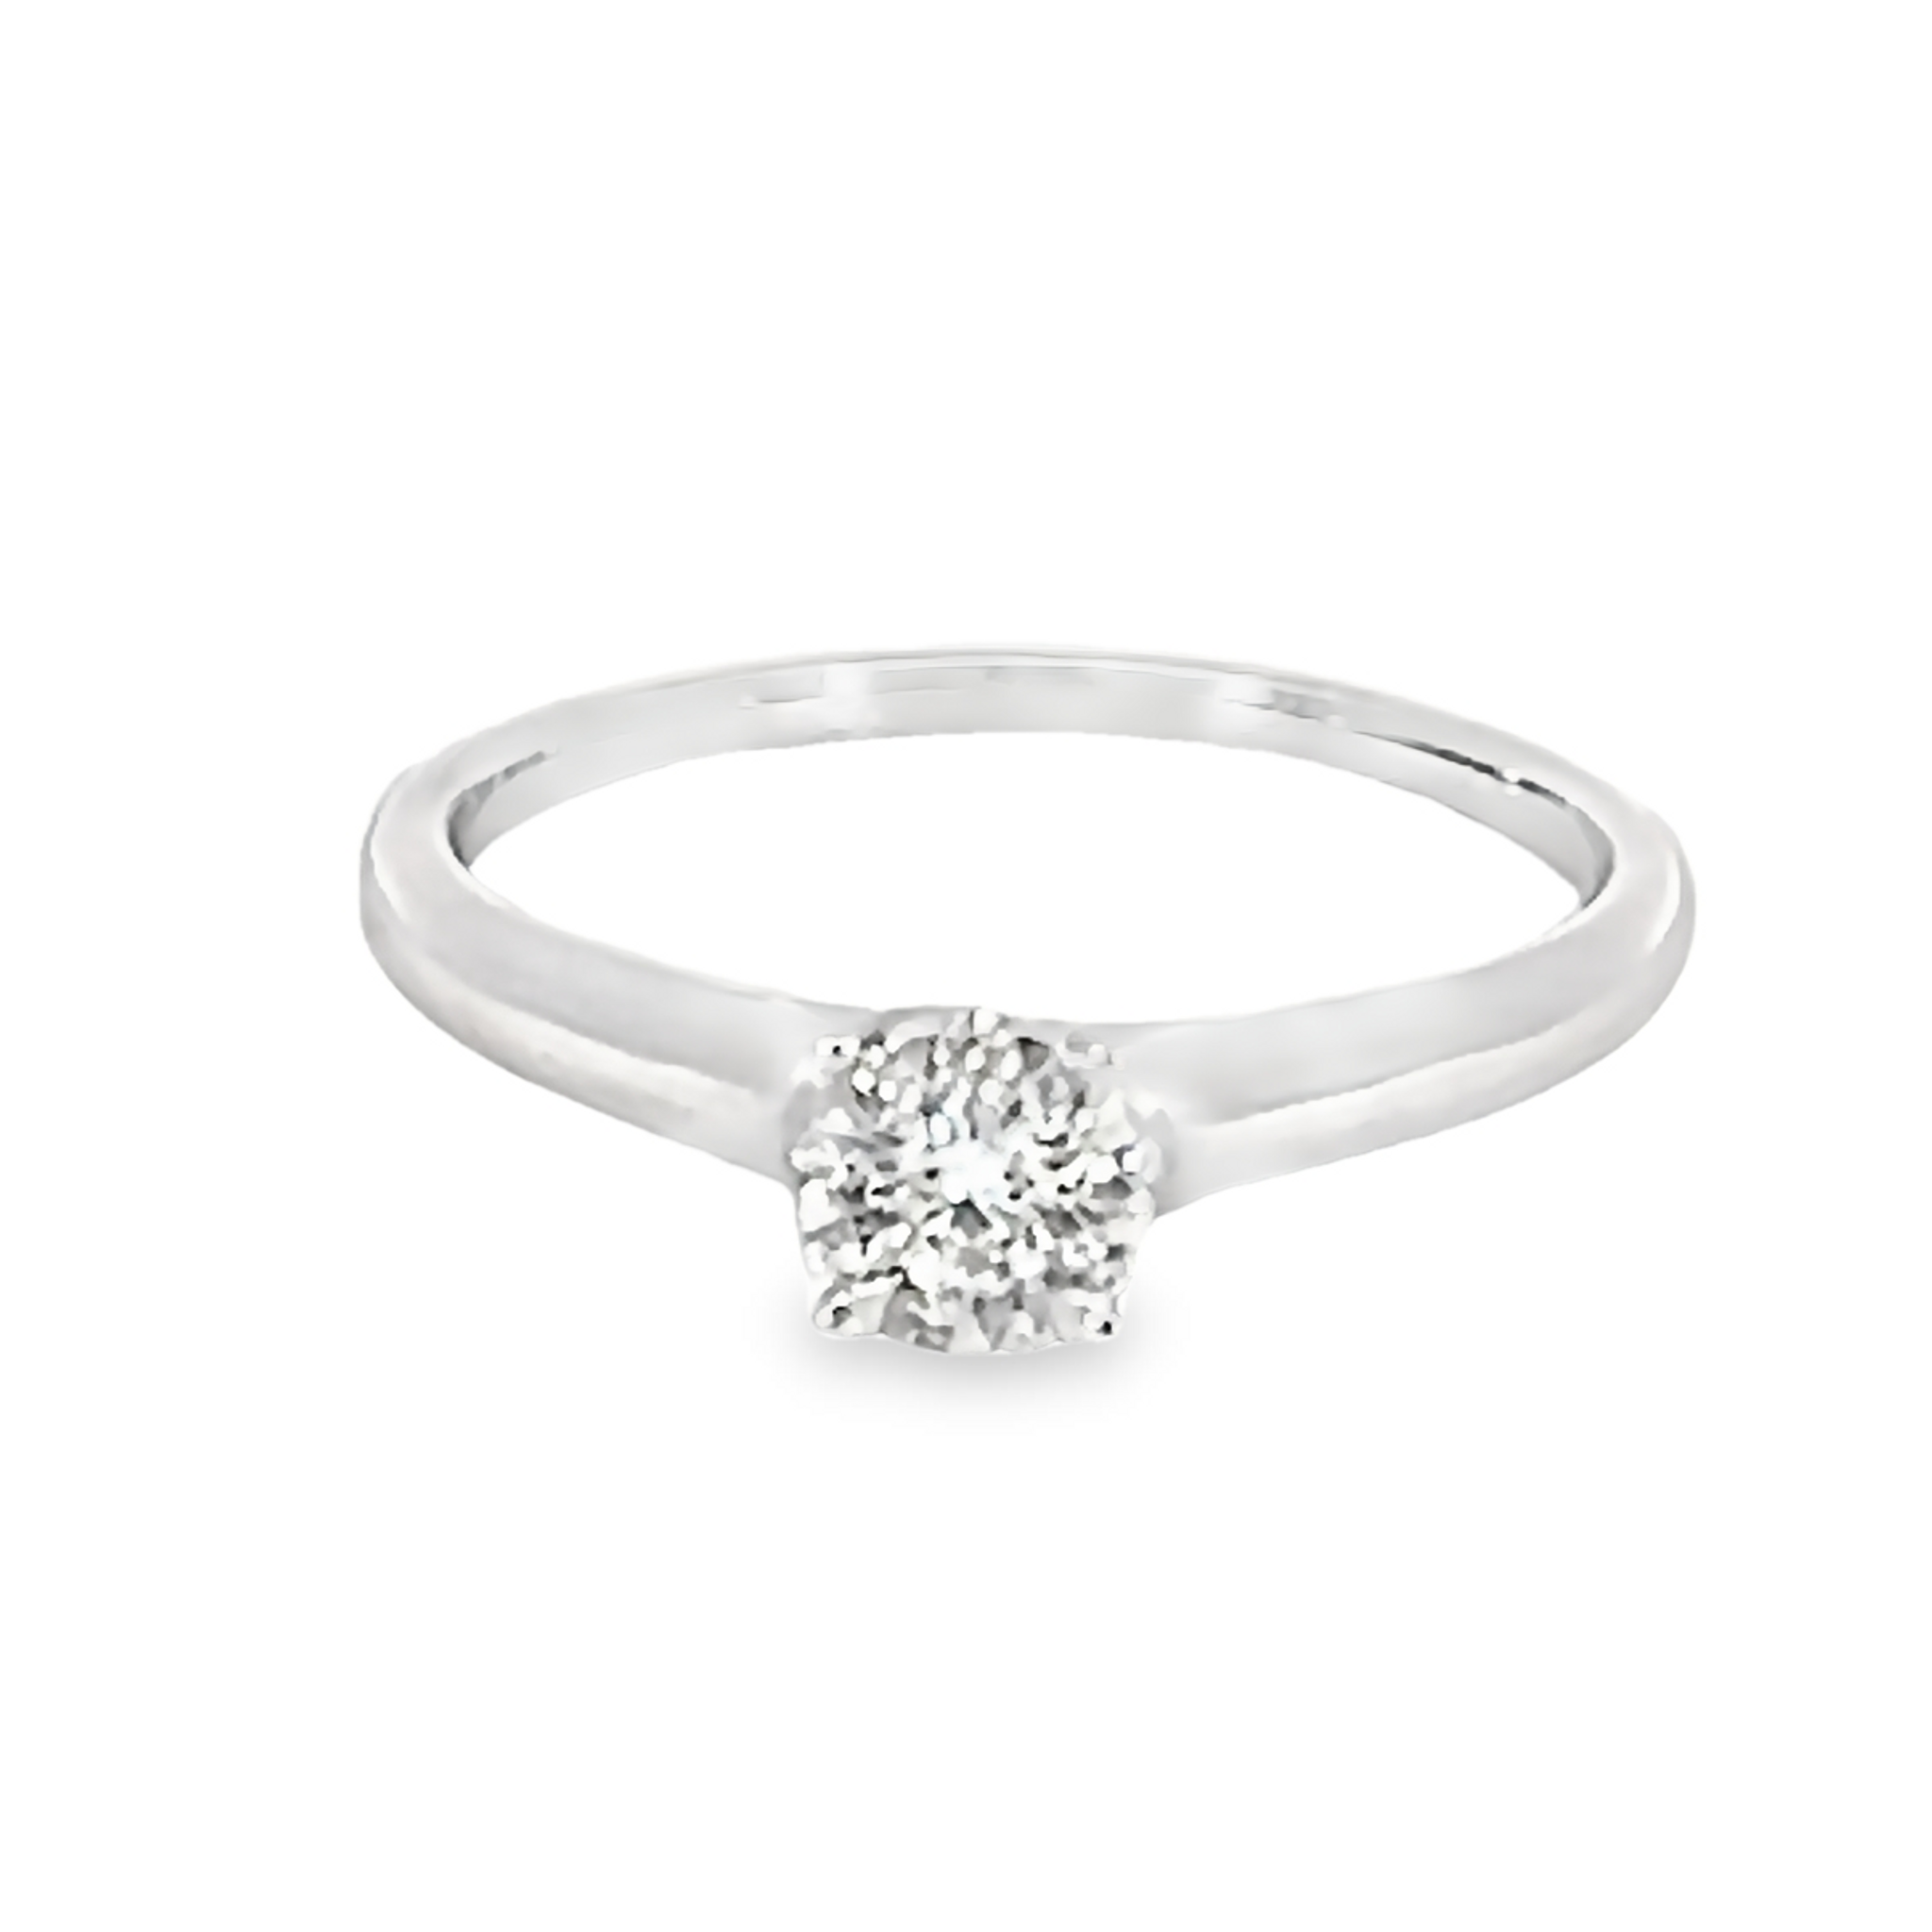 Round Cluster Diamond Engagement Ring